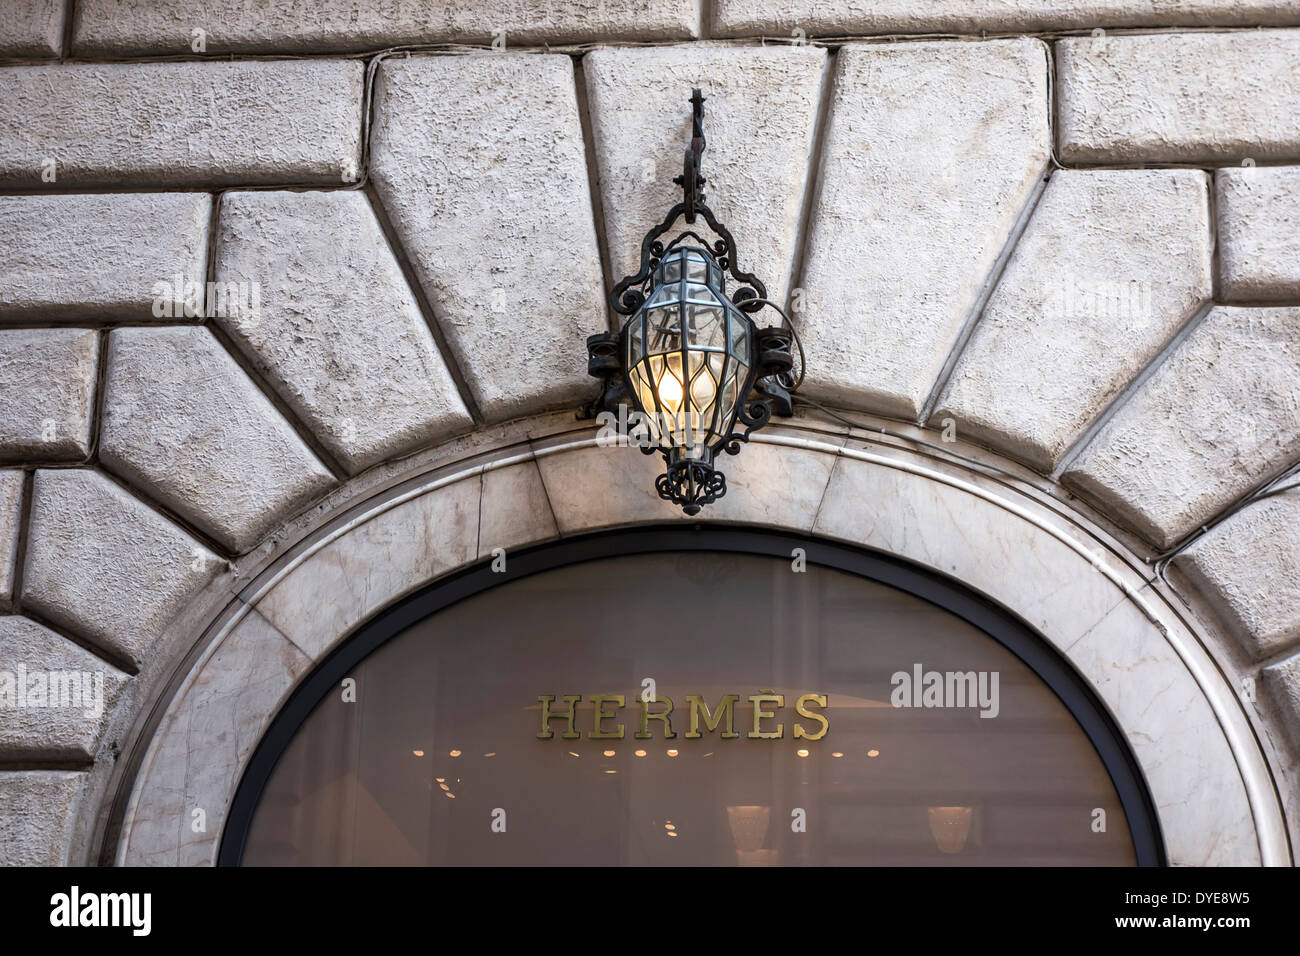 HERMES shop closeup, Rome,Italy Stock Photo